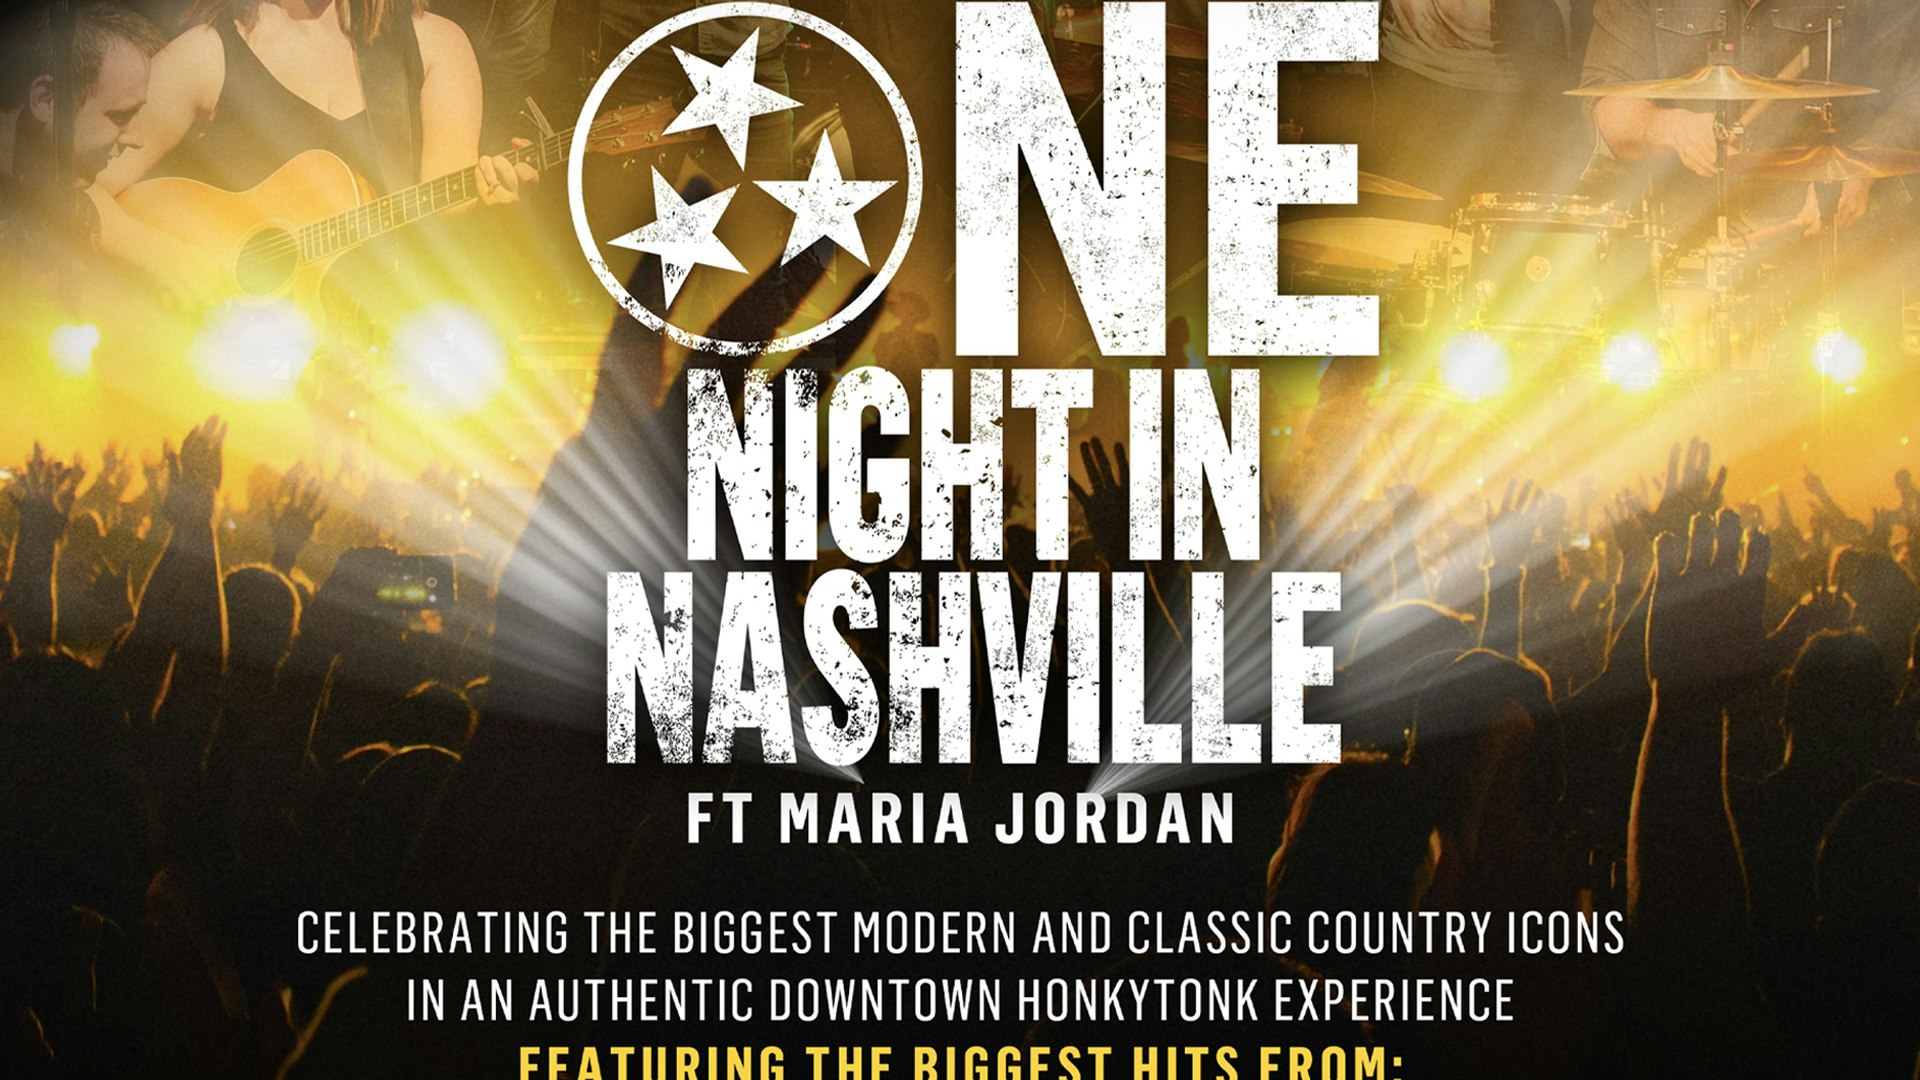 One Night in Nashville | Manchester